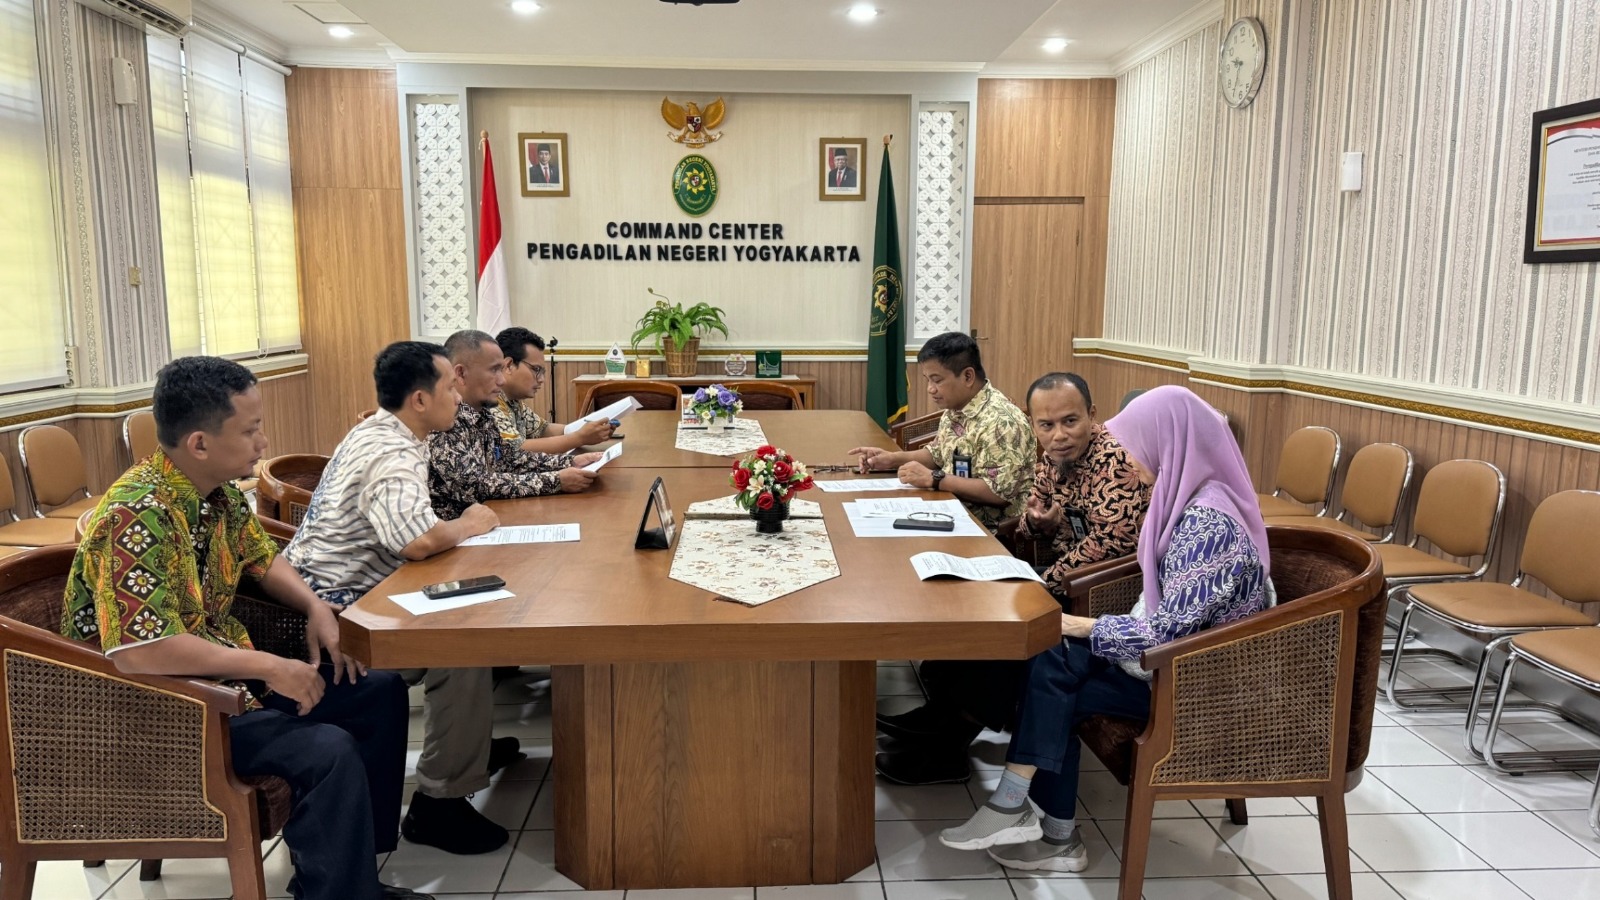 Kunjungan Kerja Tim KPPN Yogyakarta ke Pengadilan Negeri Yogyakarta